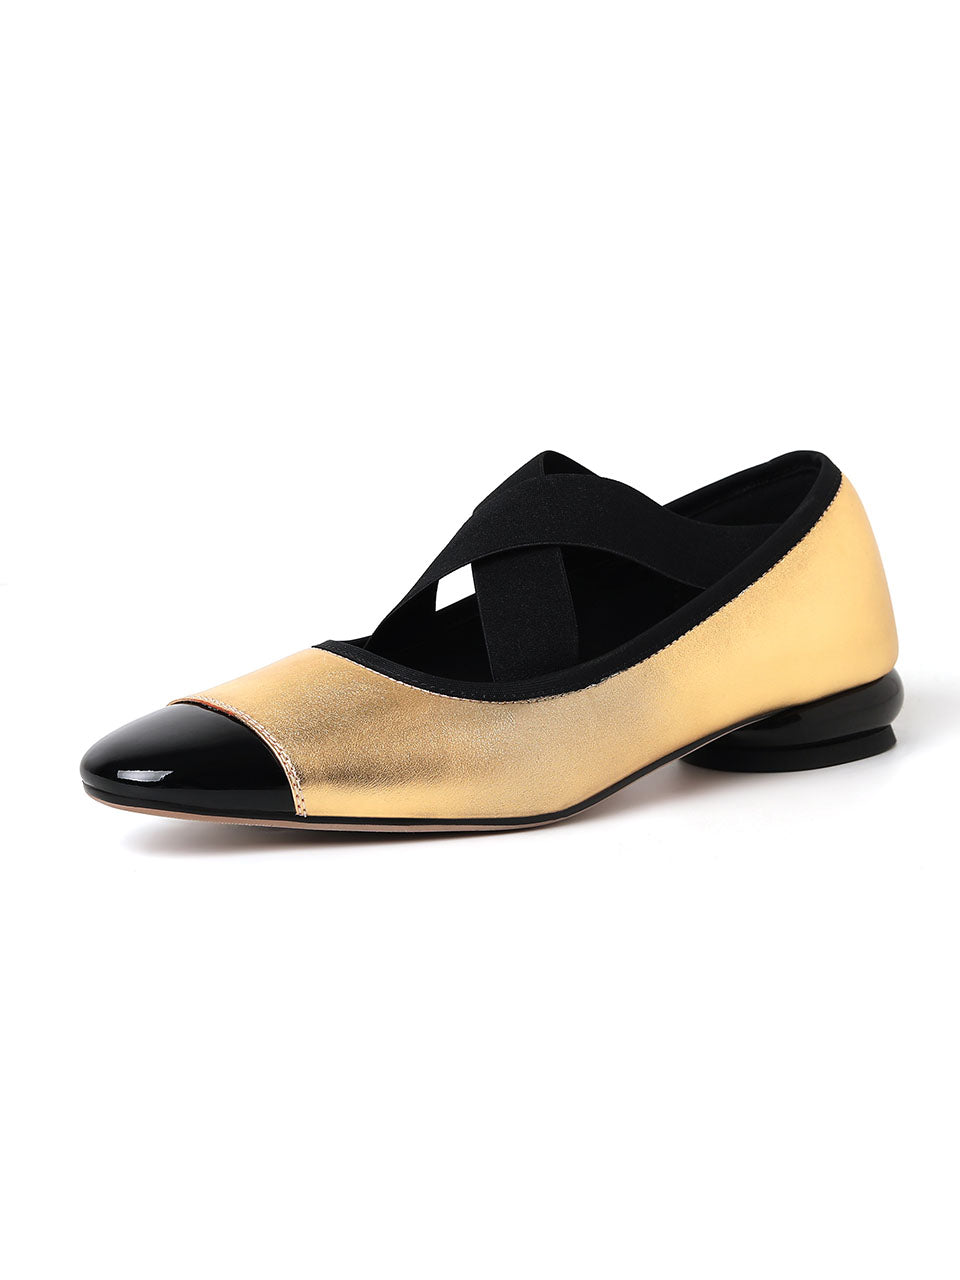 Women's Flat Heel Balletcore Square Toe Hollow Belt Leather Vintage Shoes